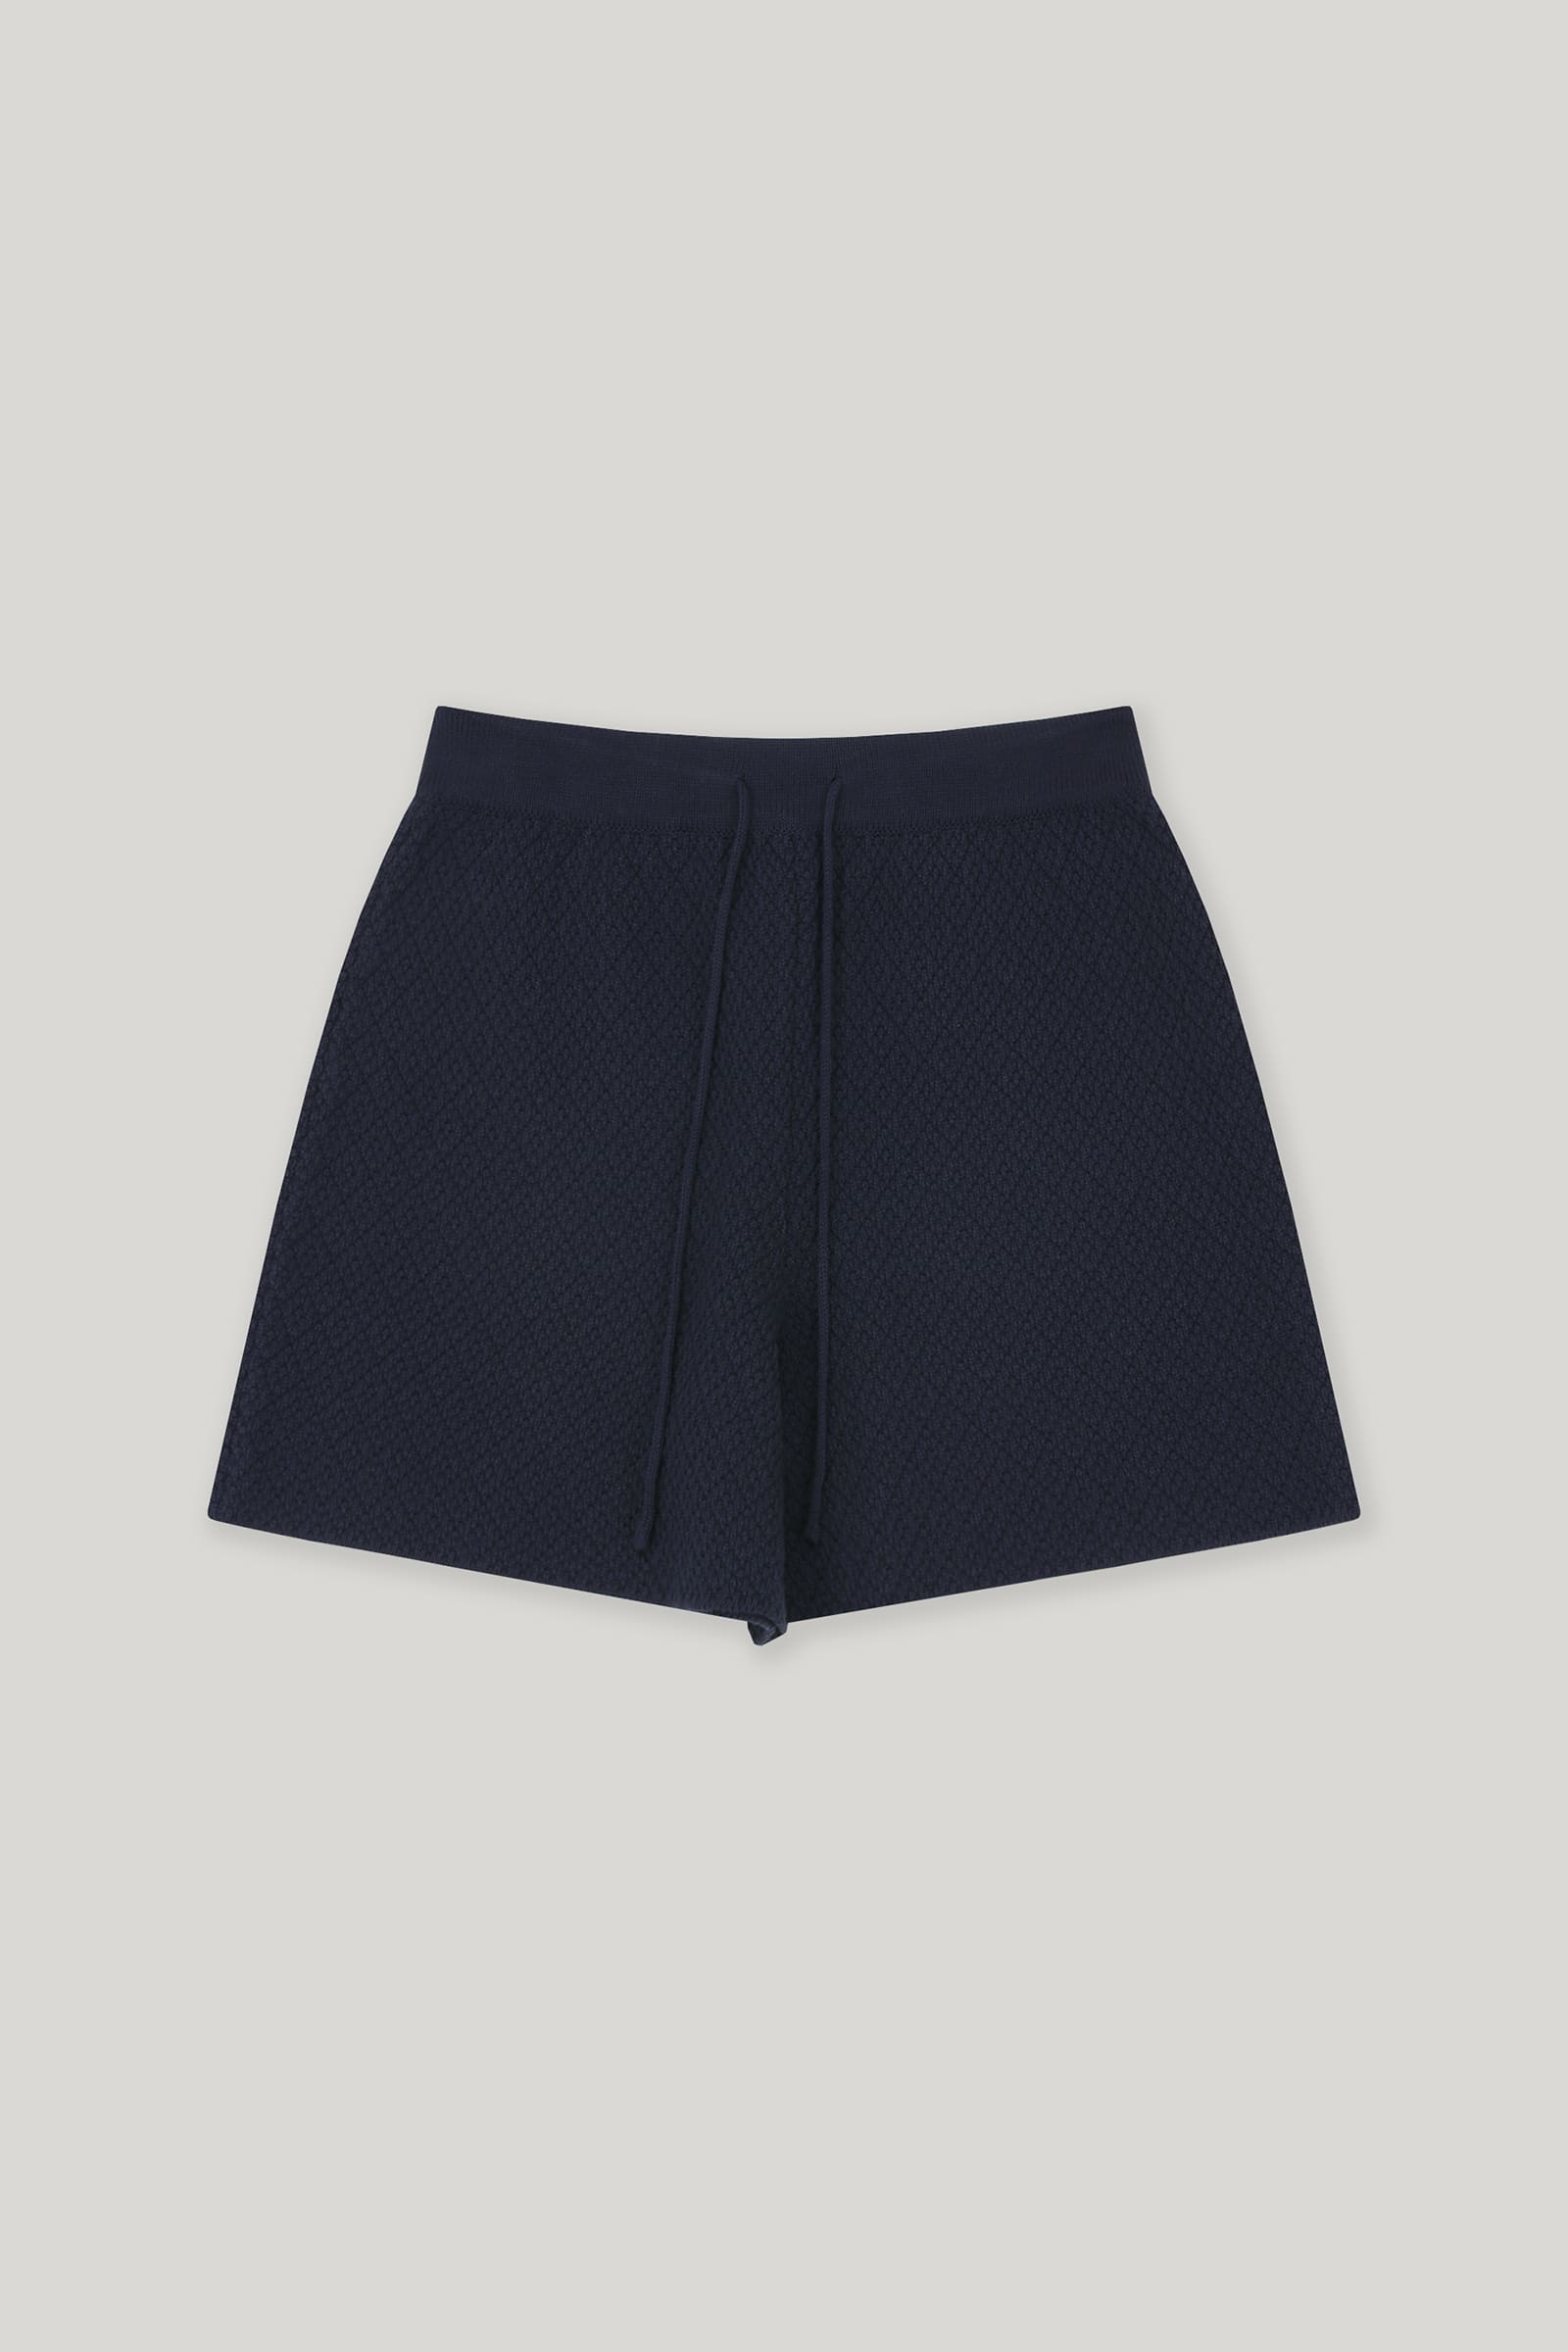 [2nd] Loren Knit Shorts